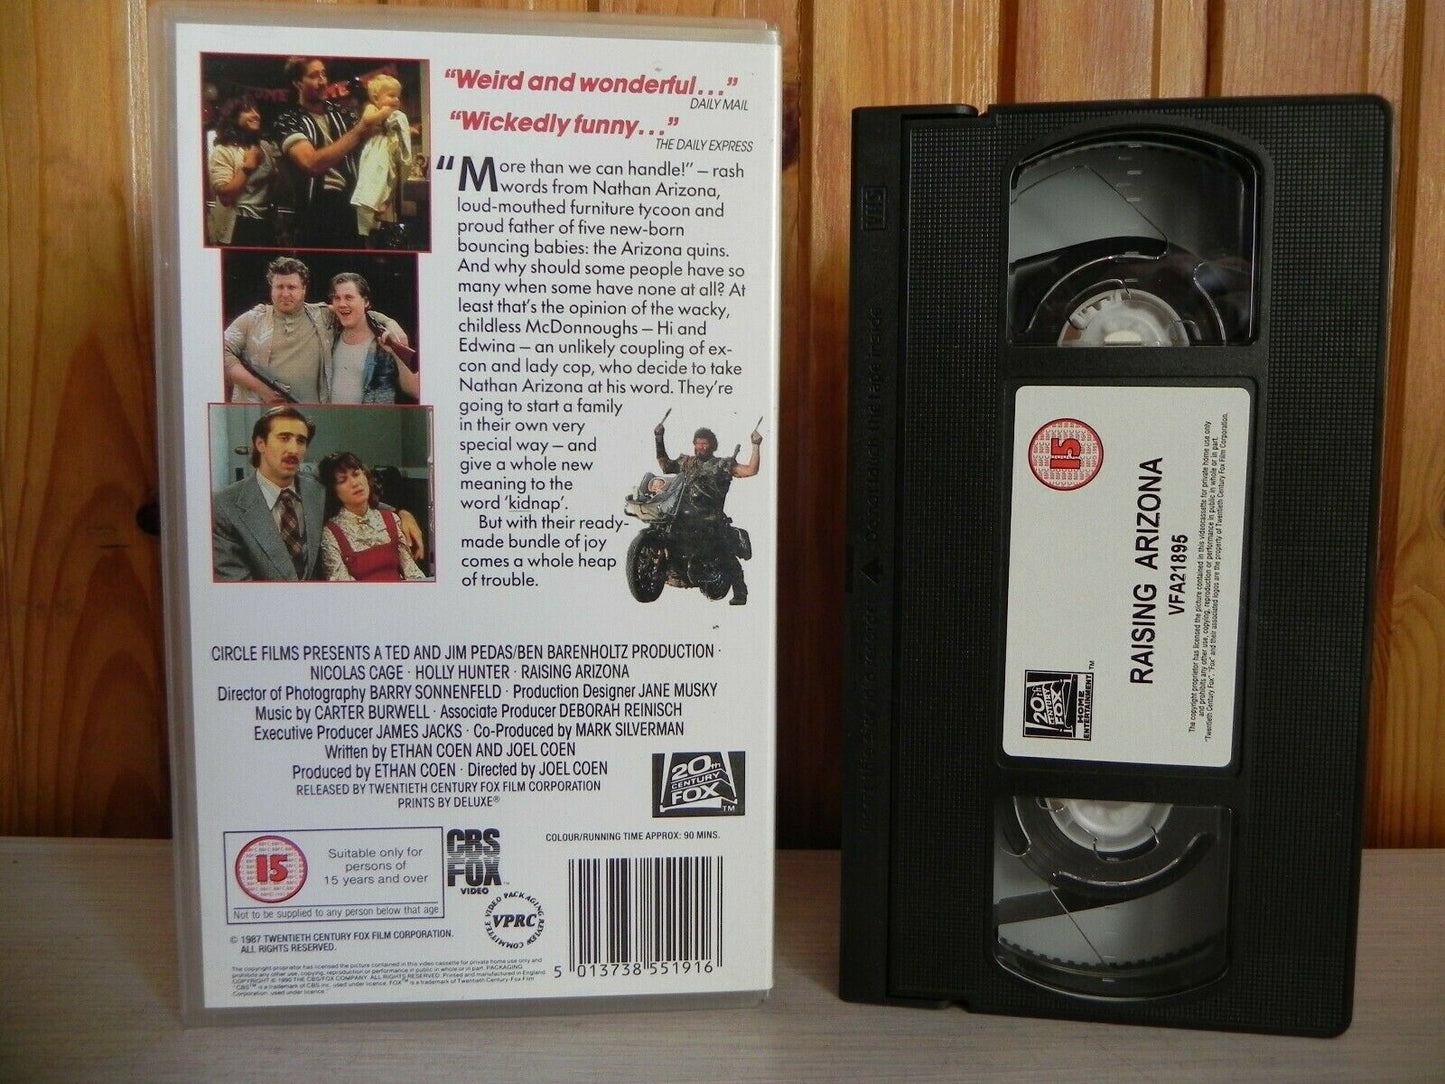 Raising Arizona - CBS/Fox Video - A Comedy Beyond Belief! - Nicolas Cage - VHS-